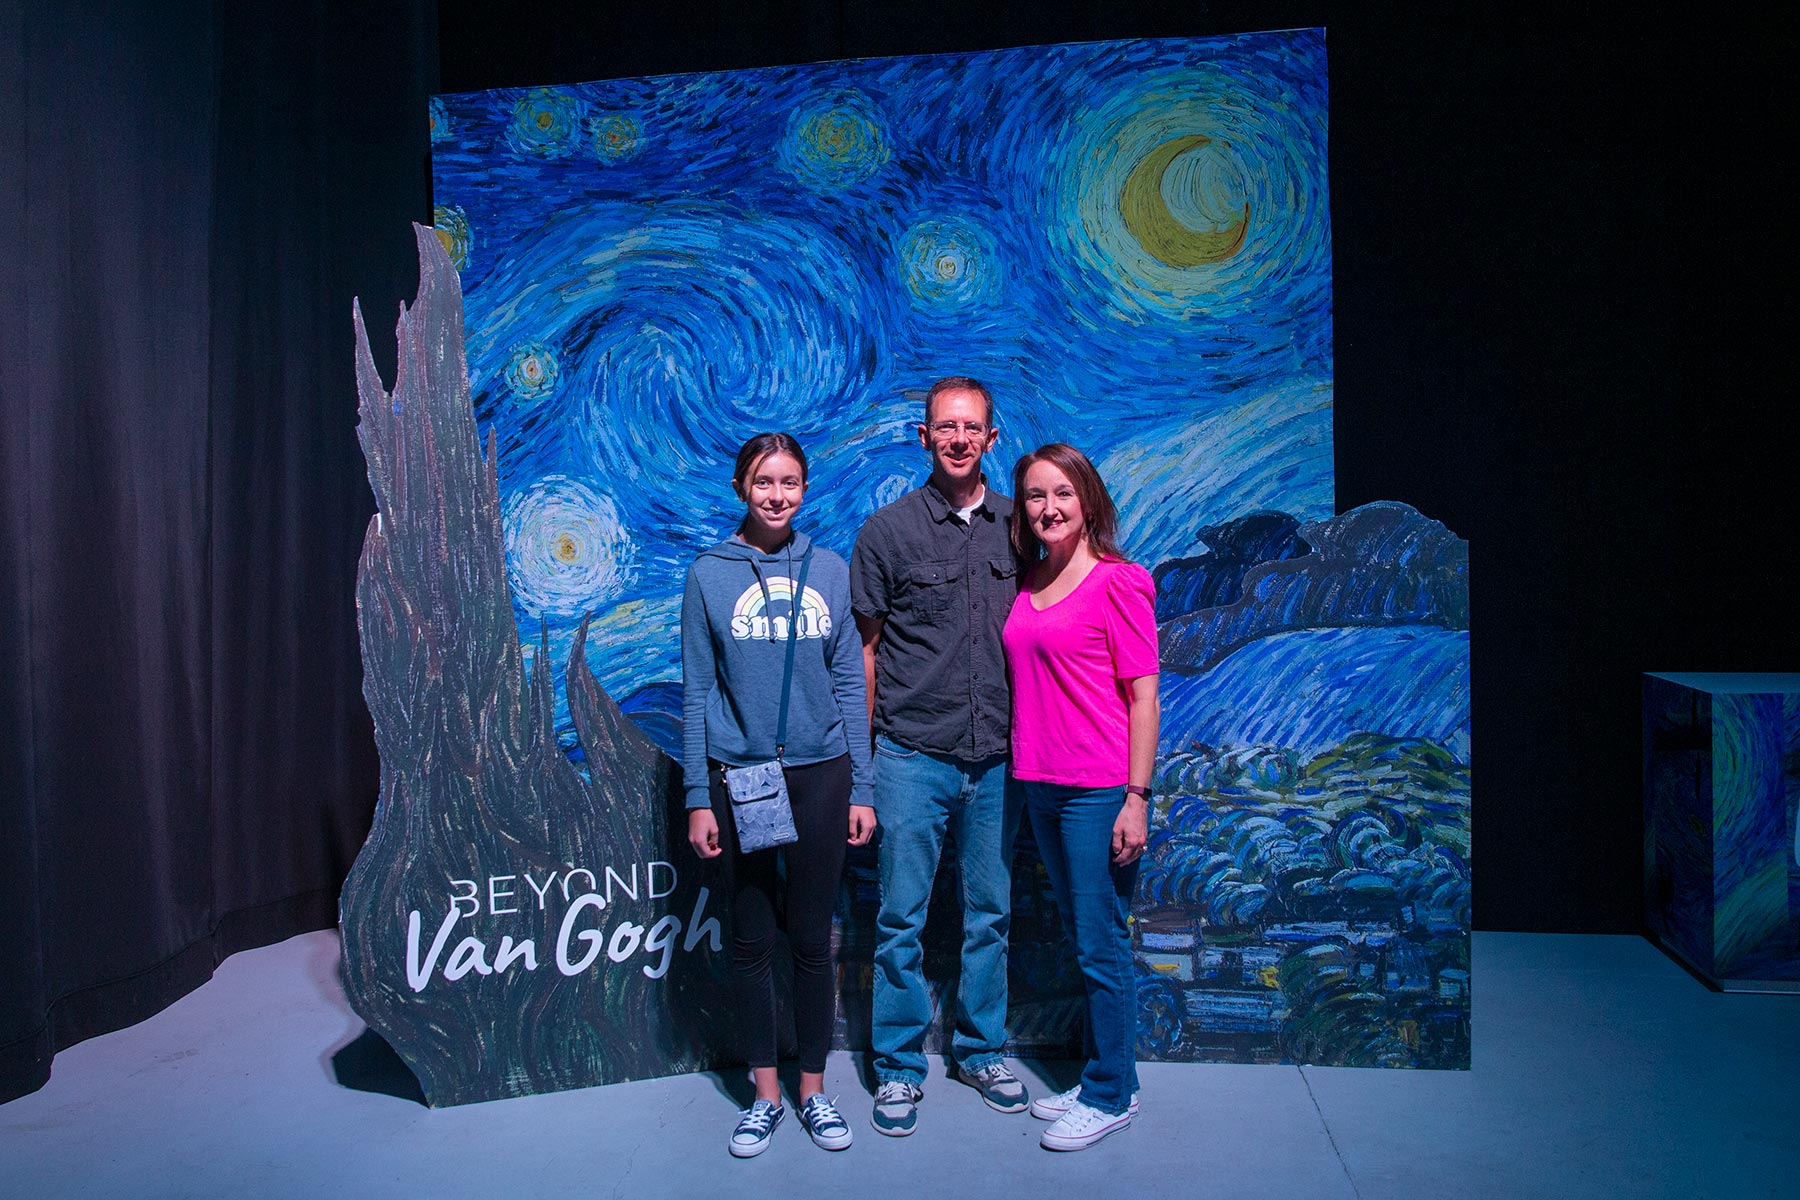 Immerse yourself in the Beyond Van Gogh Exhibit Carltonaut's Travel Tips